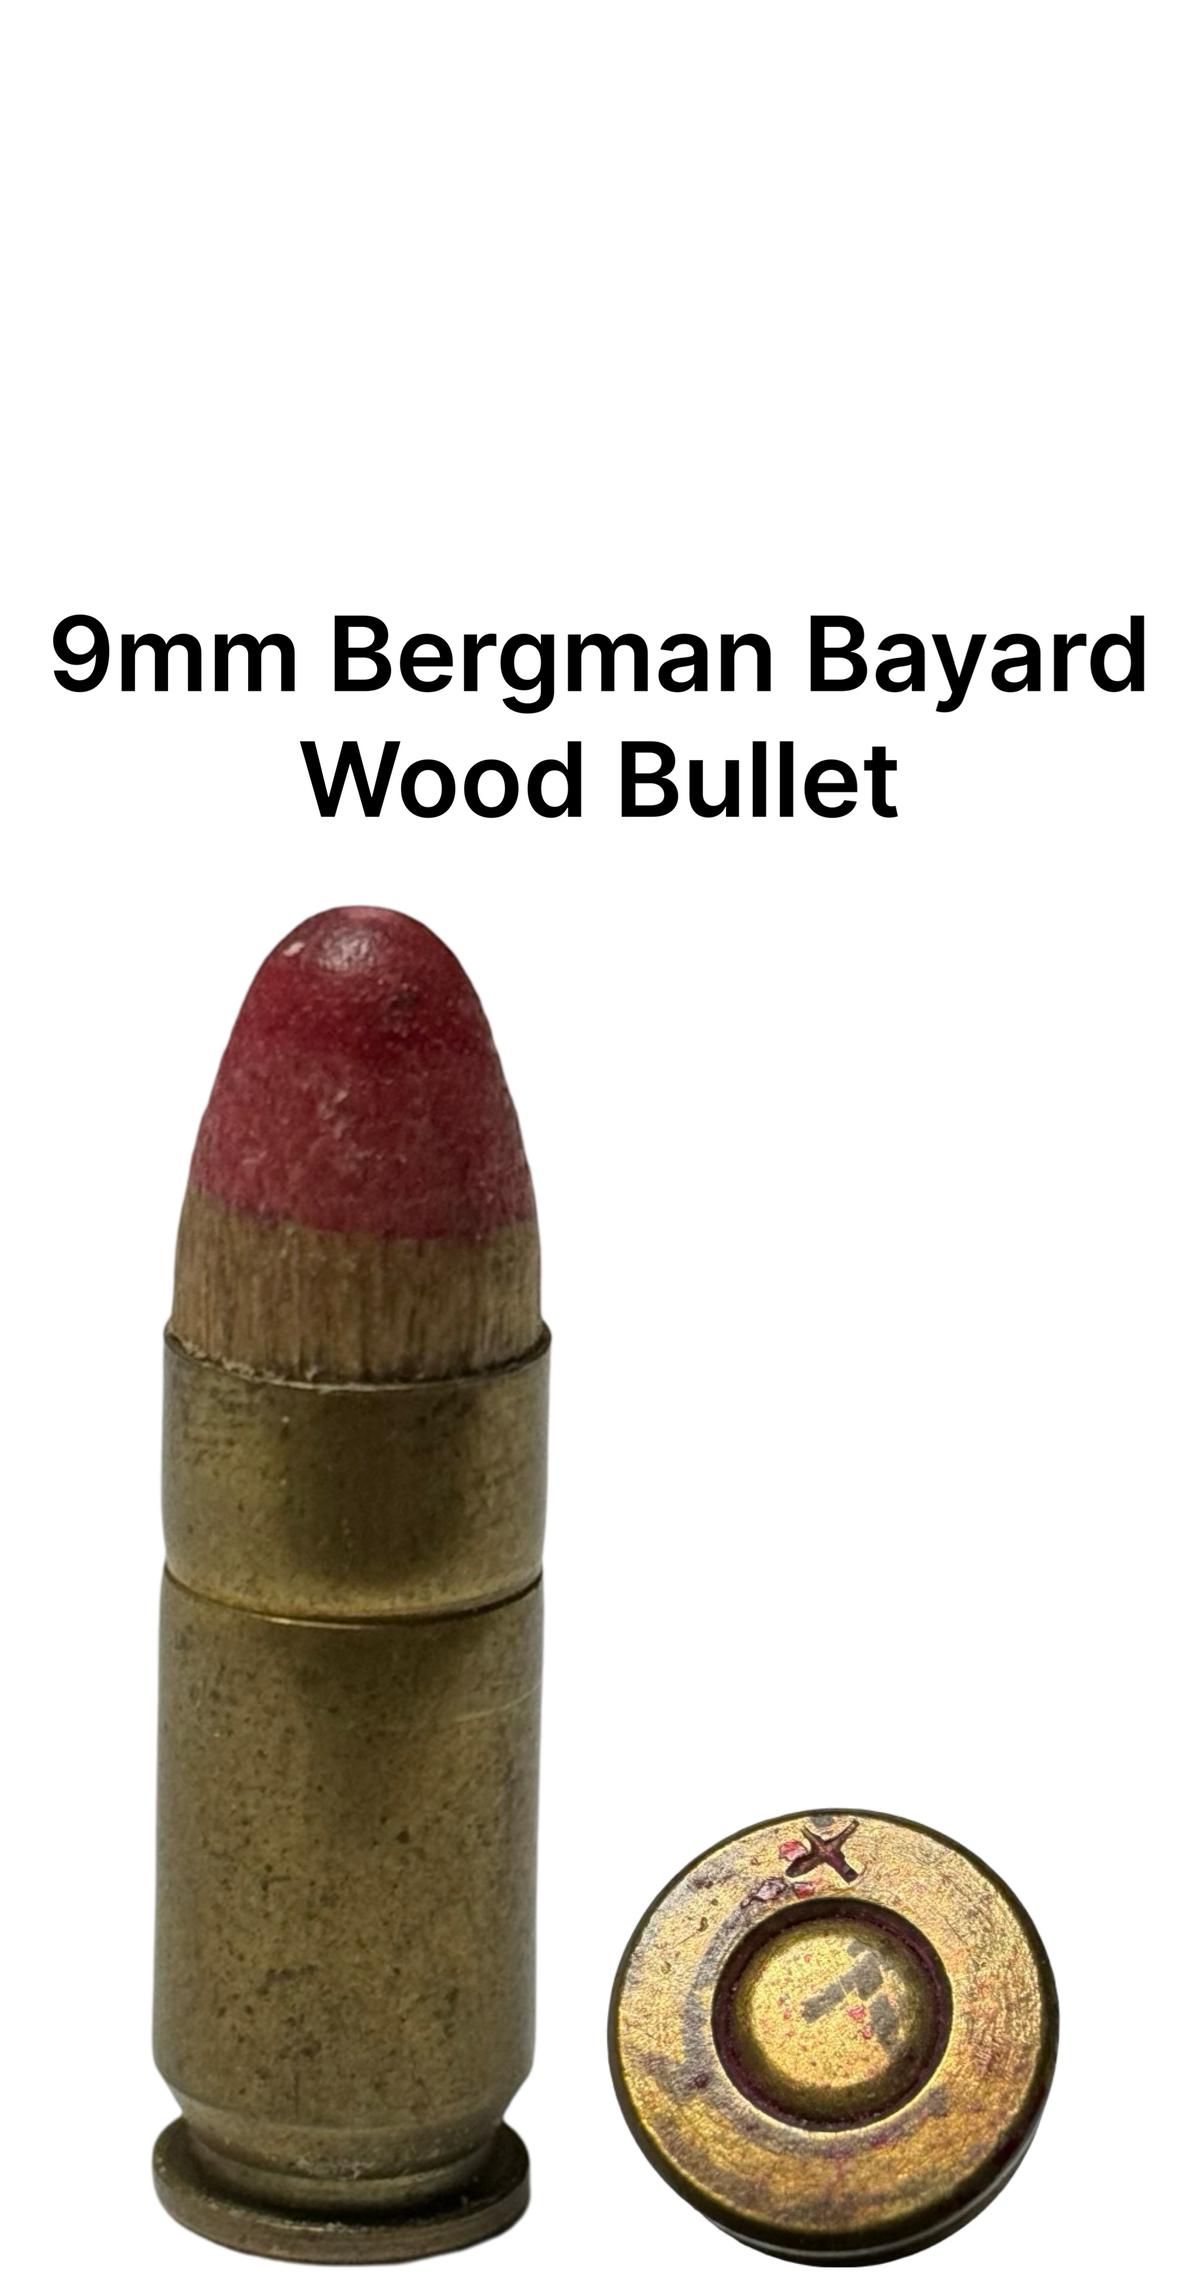 9mm Bergman Bayard Cartridge with Wood Bullet